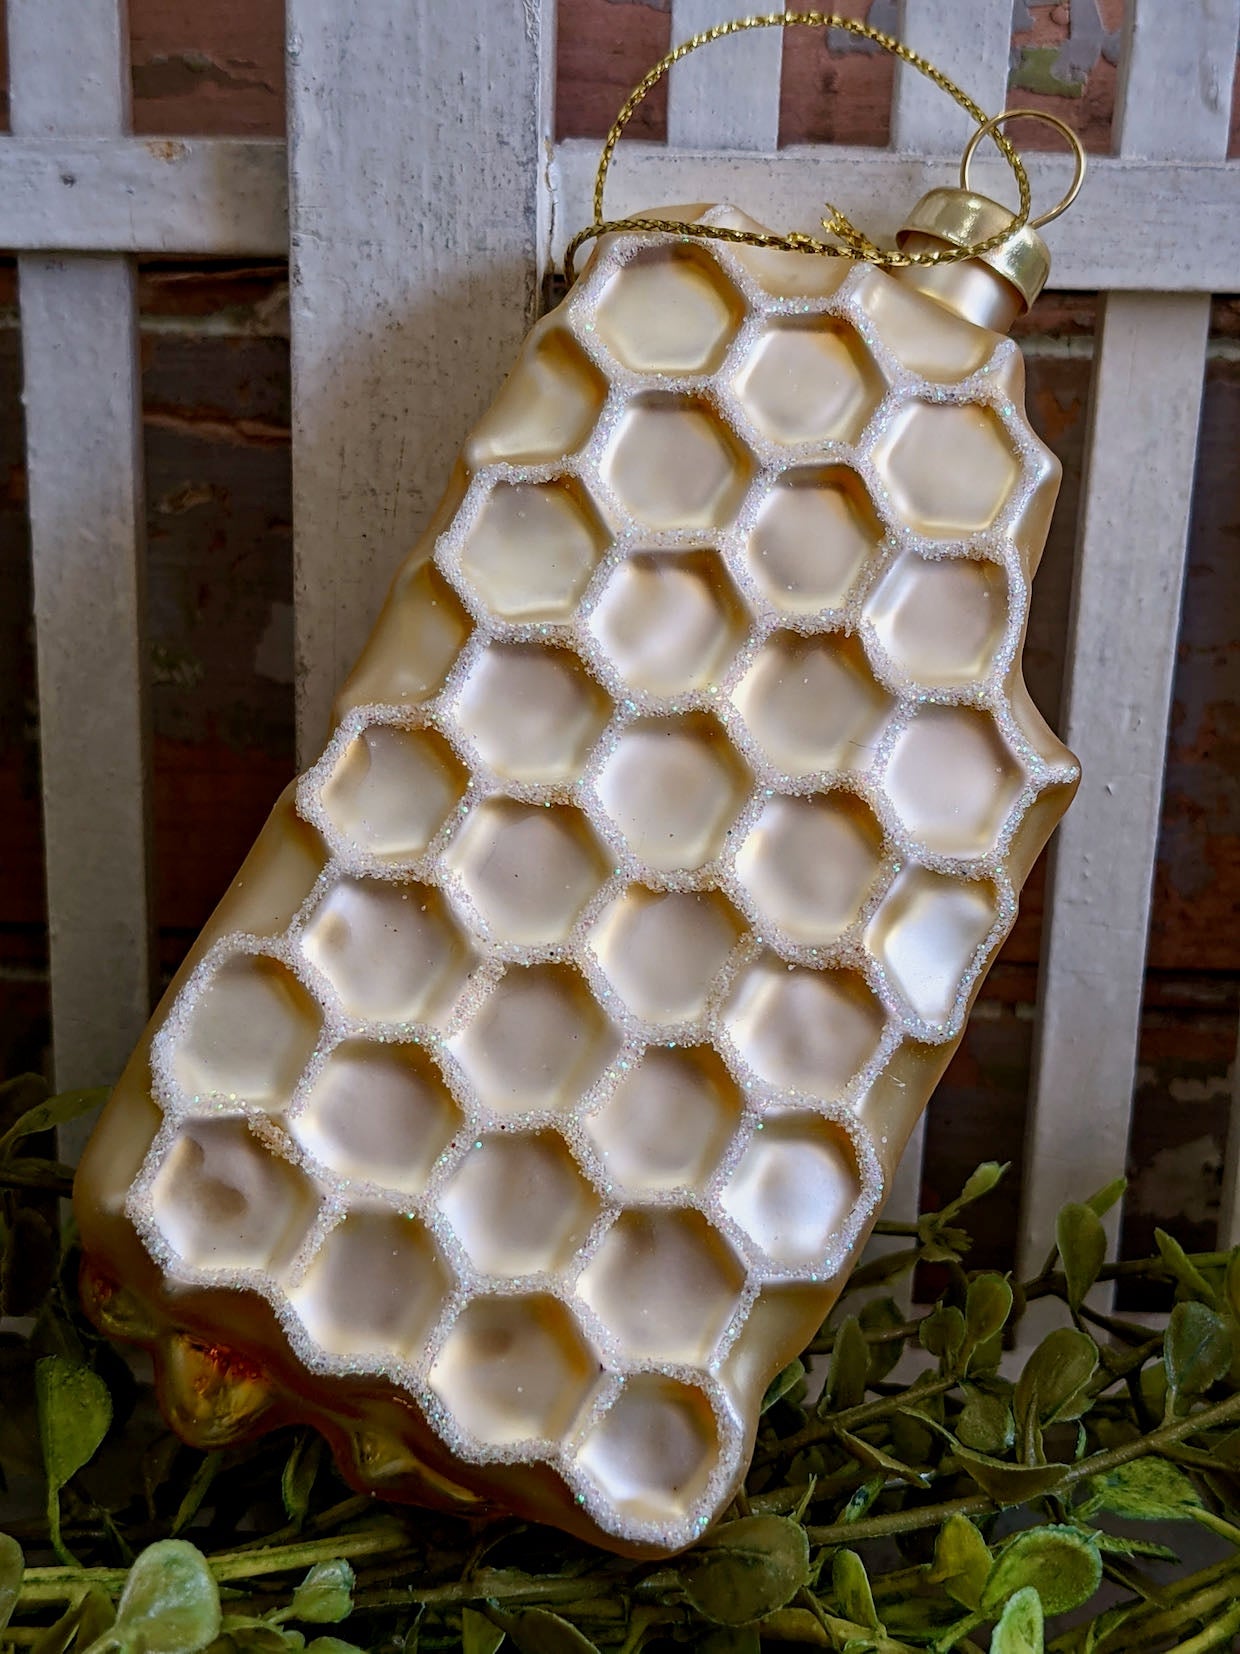 Glittered Glass Honeycomb & Honeybee Ornament - Marmalade Mercantile